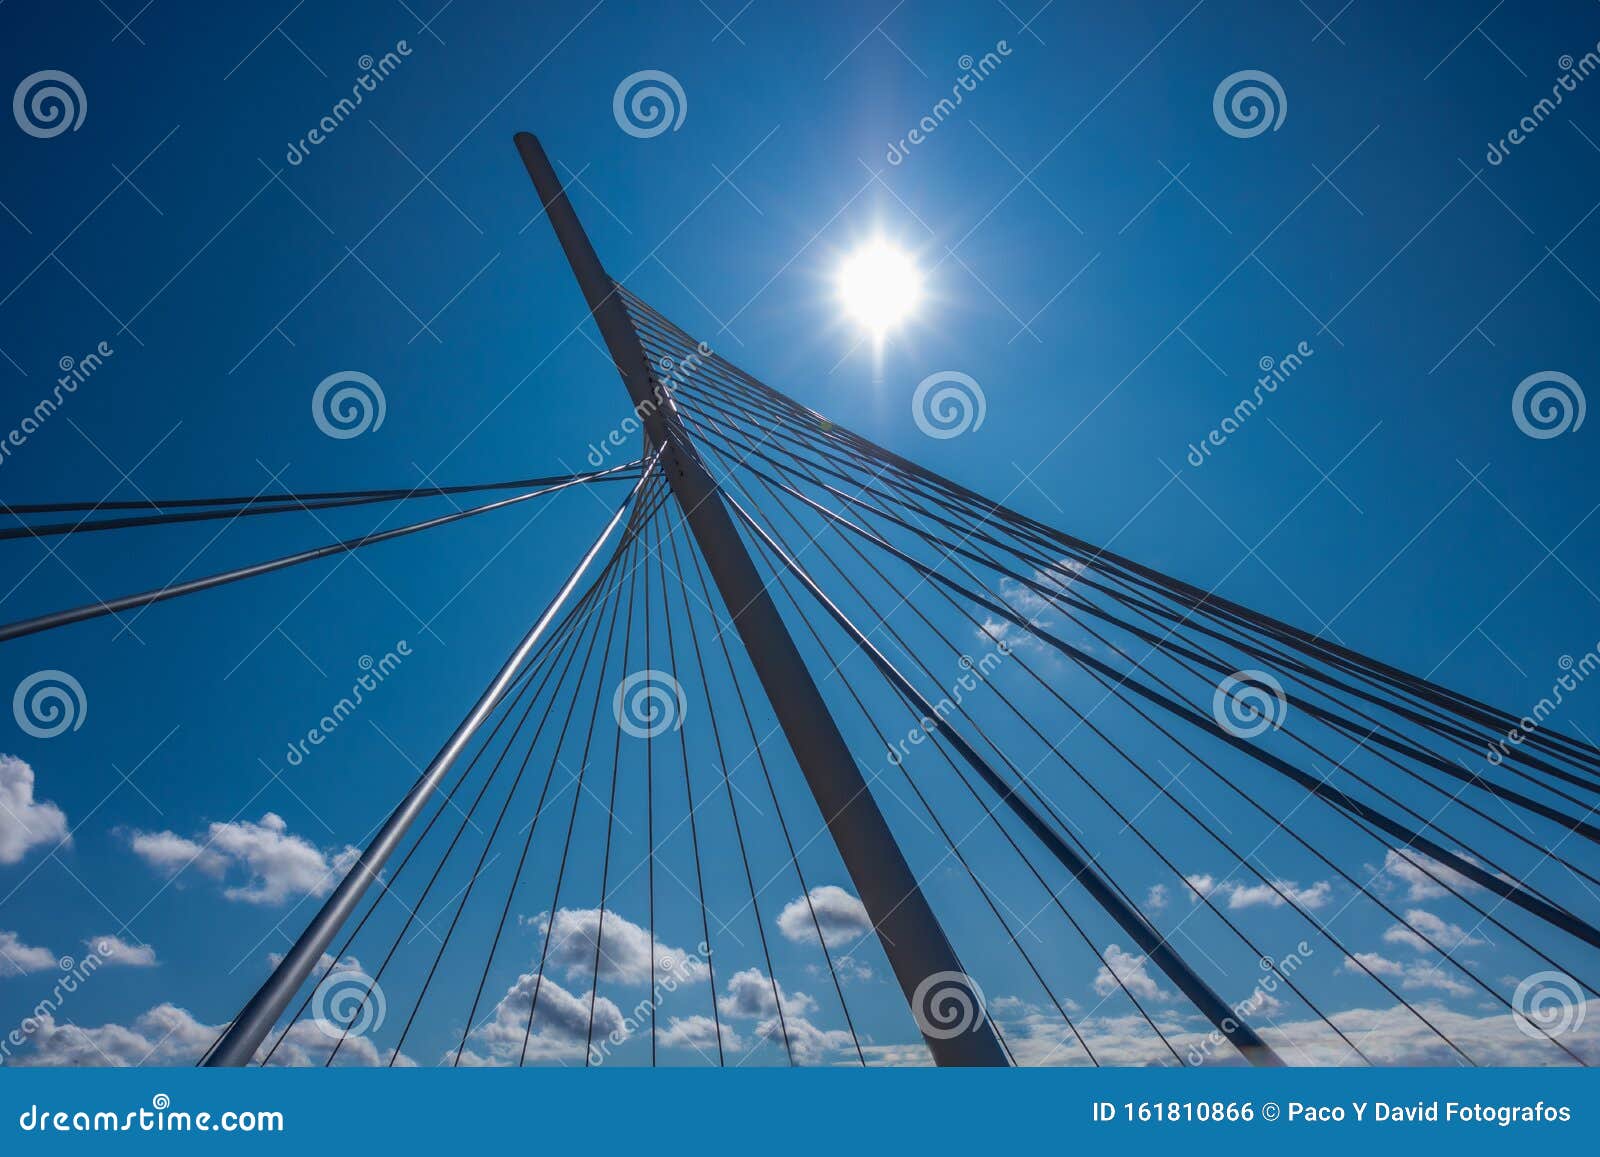 toledo bridge of tubular metal structure with the front sun